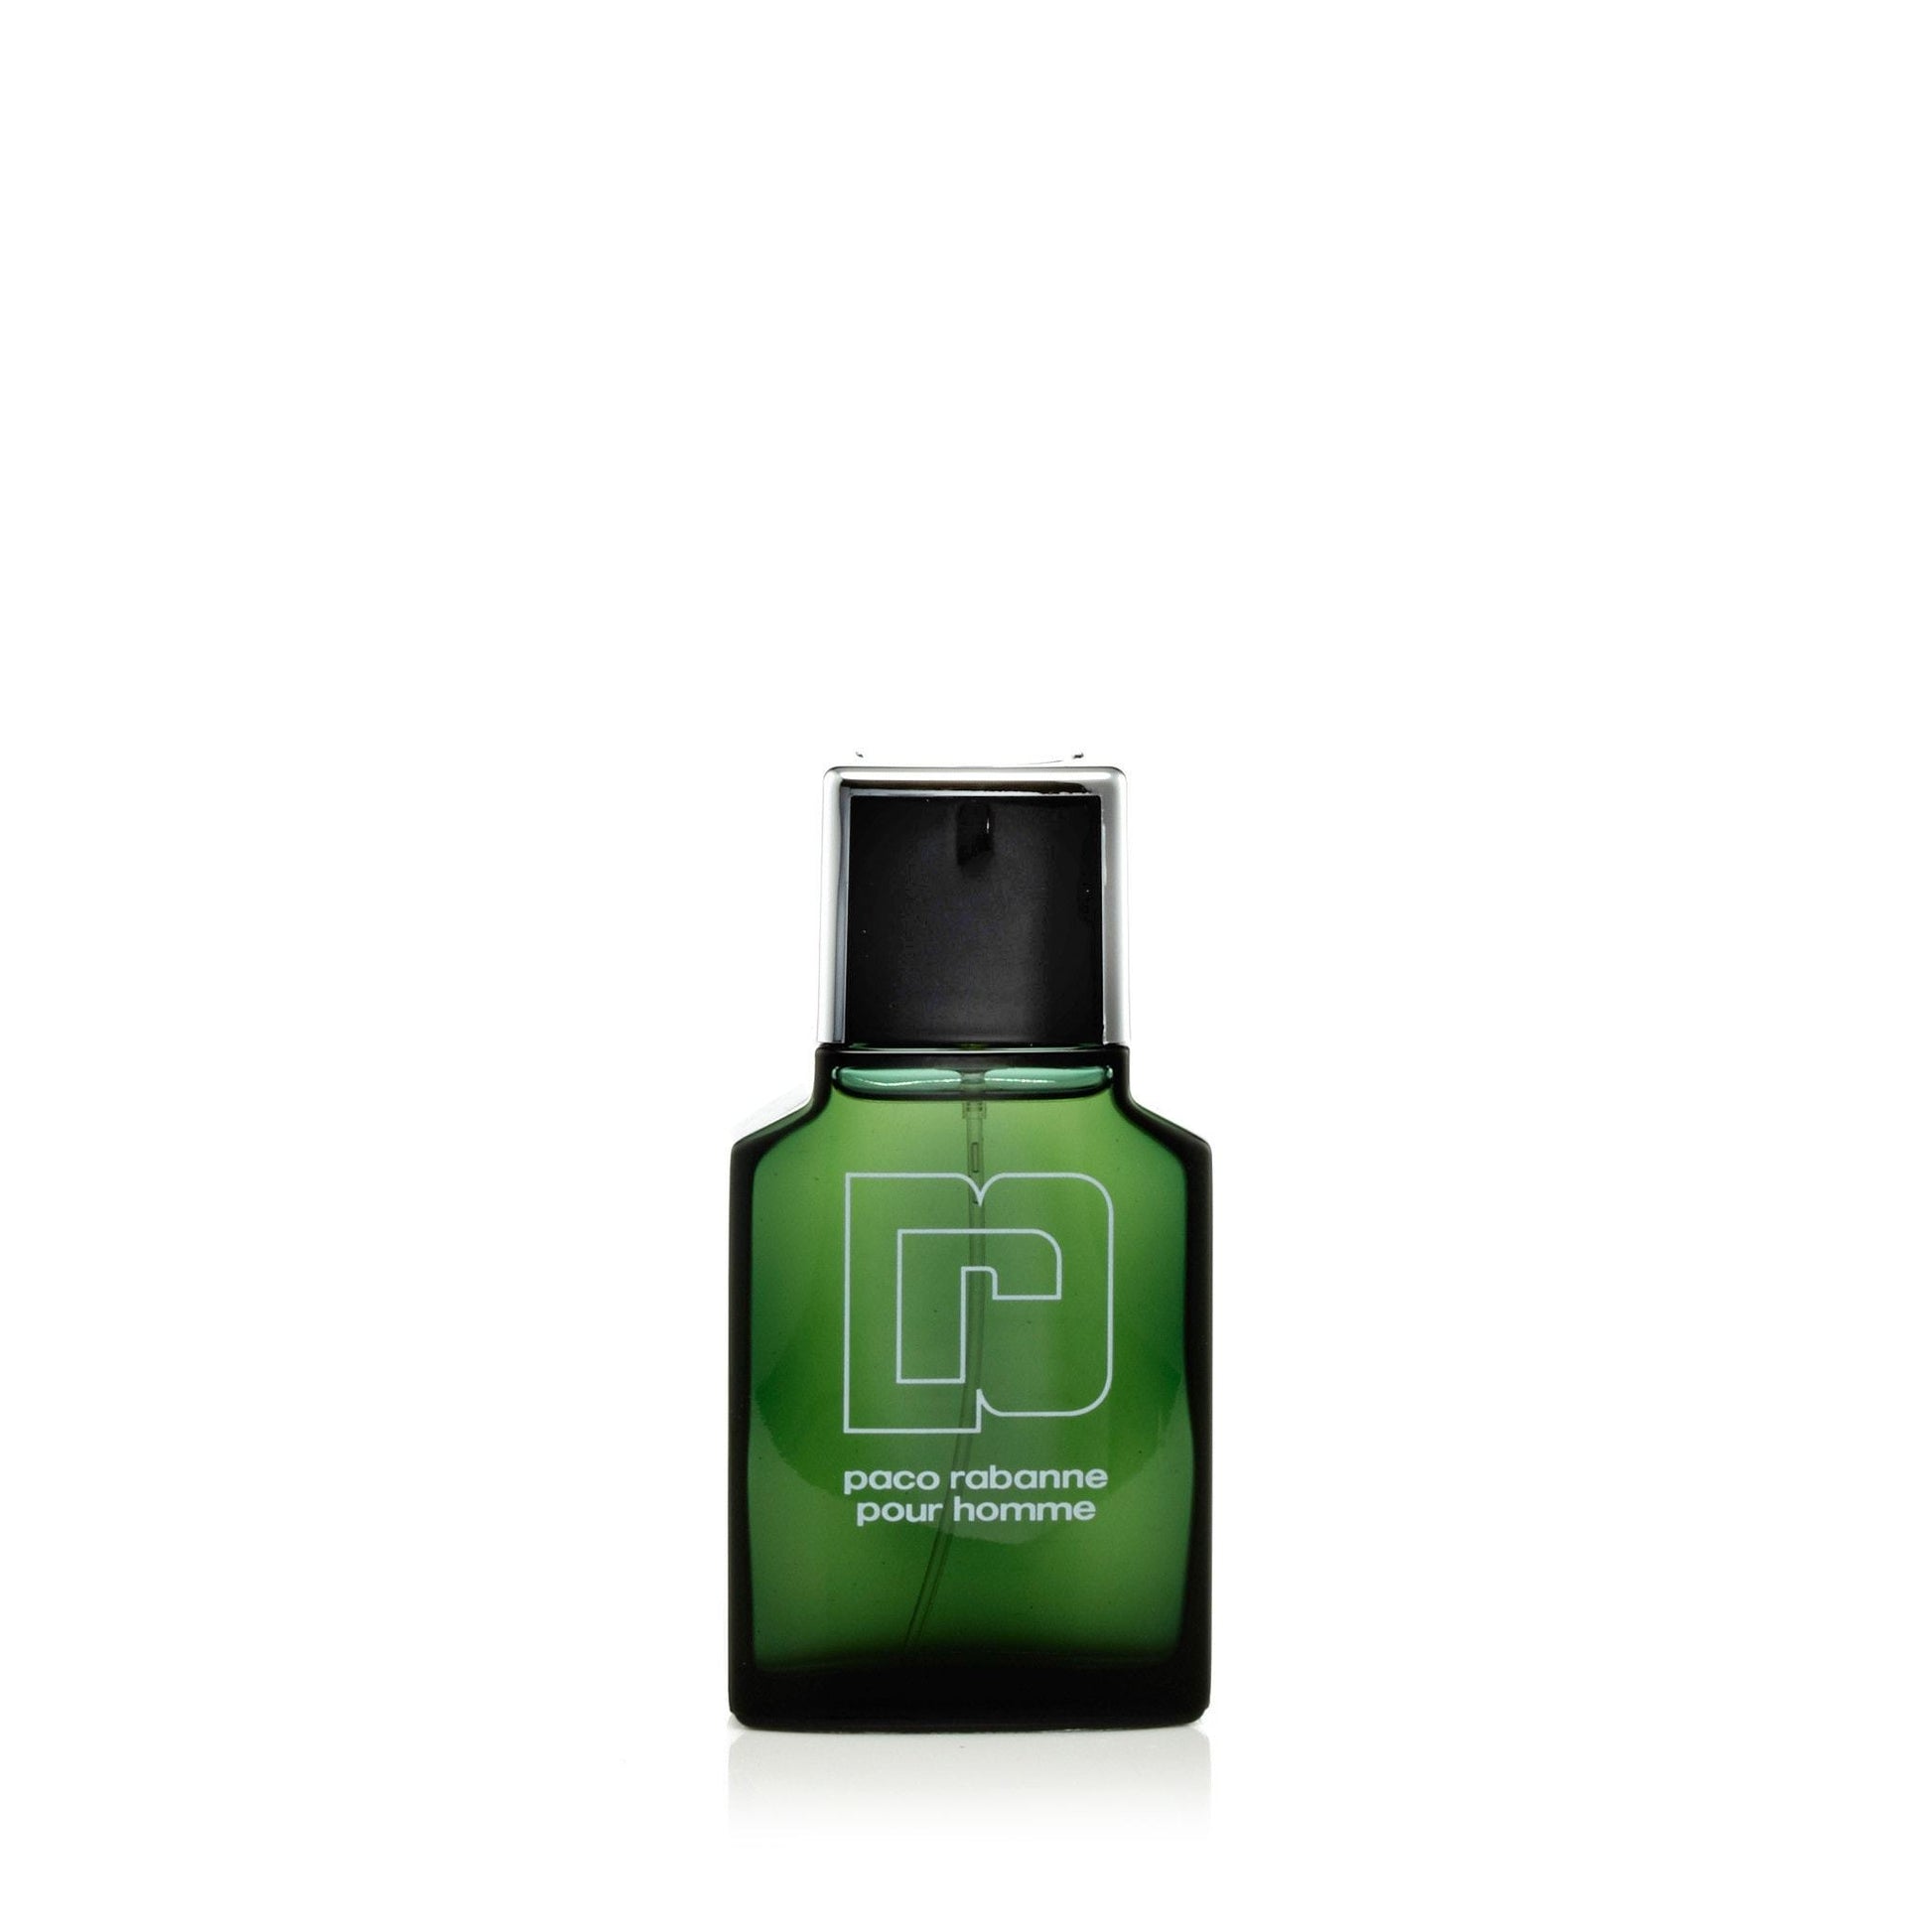 Paco Rabanne Eau de Toilette Spray for Men by Paco Rabanne, Product image 3